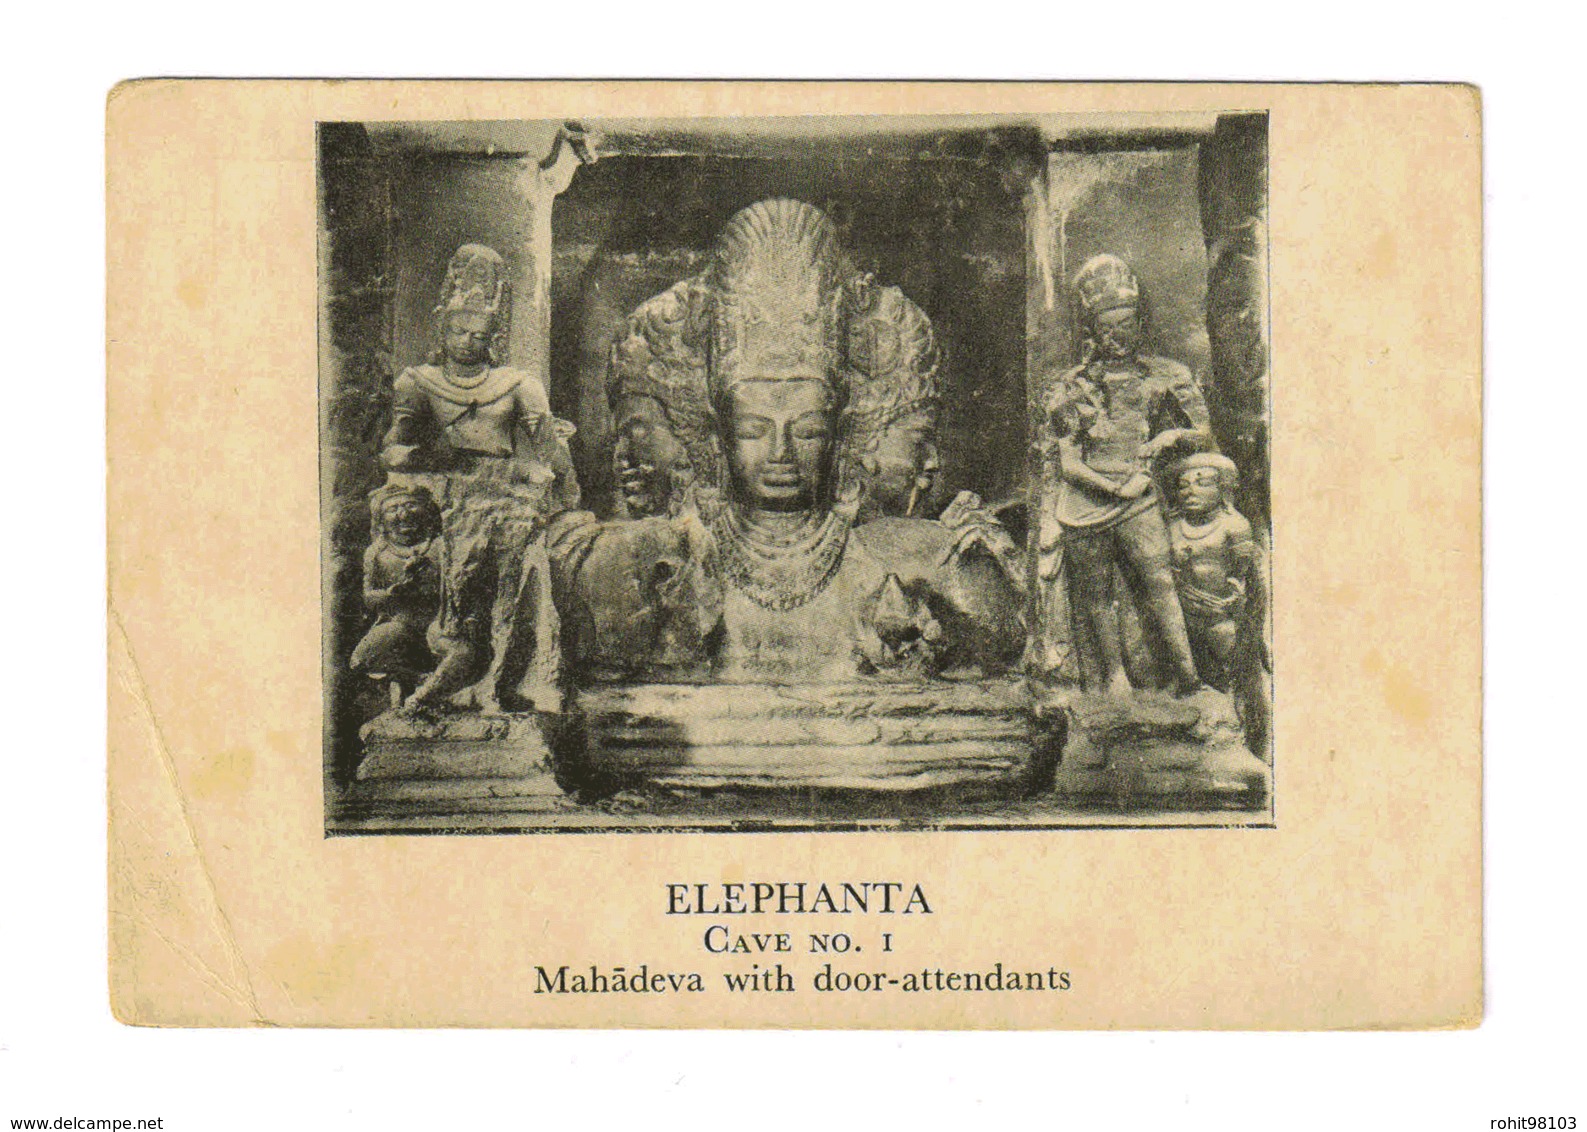 Trimurti Of Lord Shiva ( Mahadeva ) With His Door Attendants At The Elephanta Cave Temples, Mumbai, India, Lot # IND 596 - India